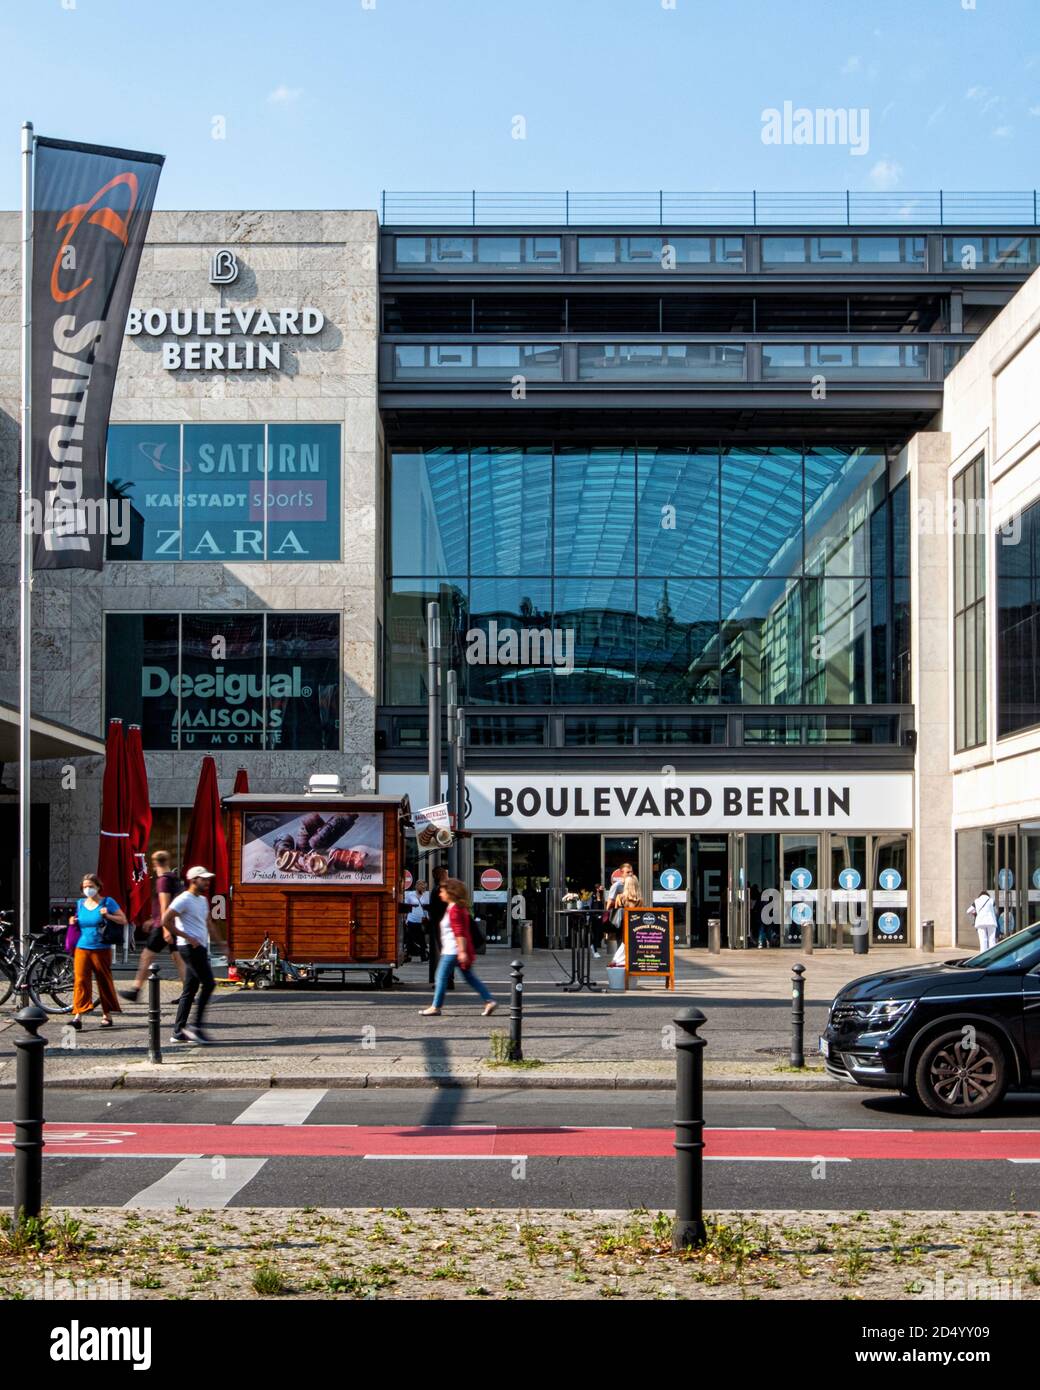 Boulevard Berlin - large shopping centre at Schloßstraße 10,Steglitz, Berlin. Shopping mall exterior view Stock Photo